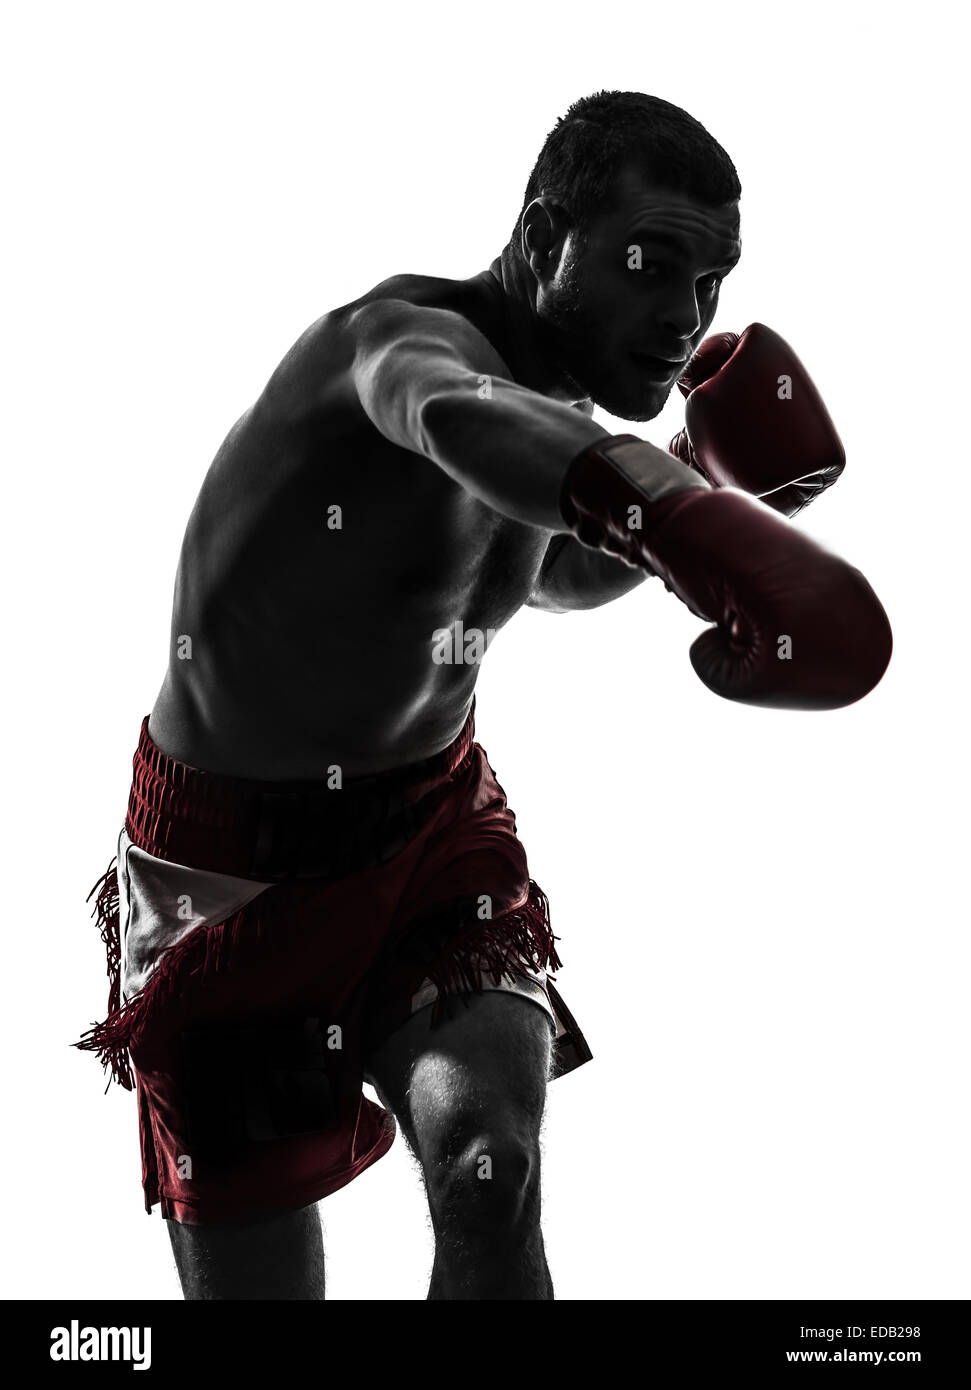 one  man exercising thai boxing in silhouette studio on white background Stock Photo